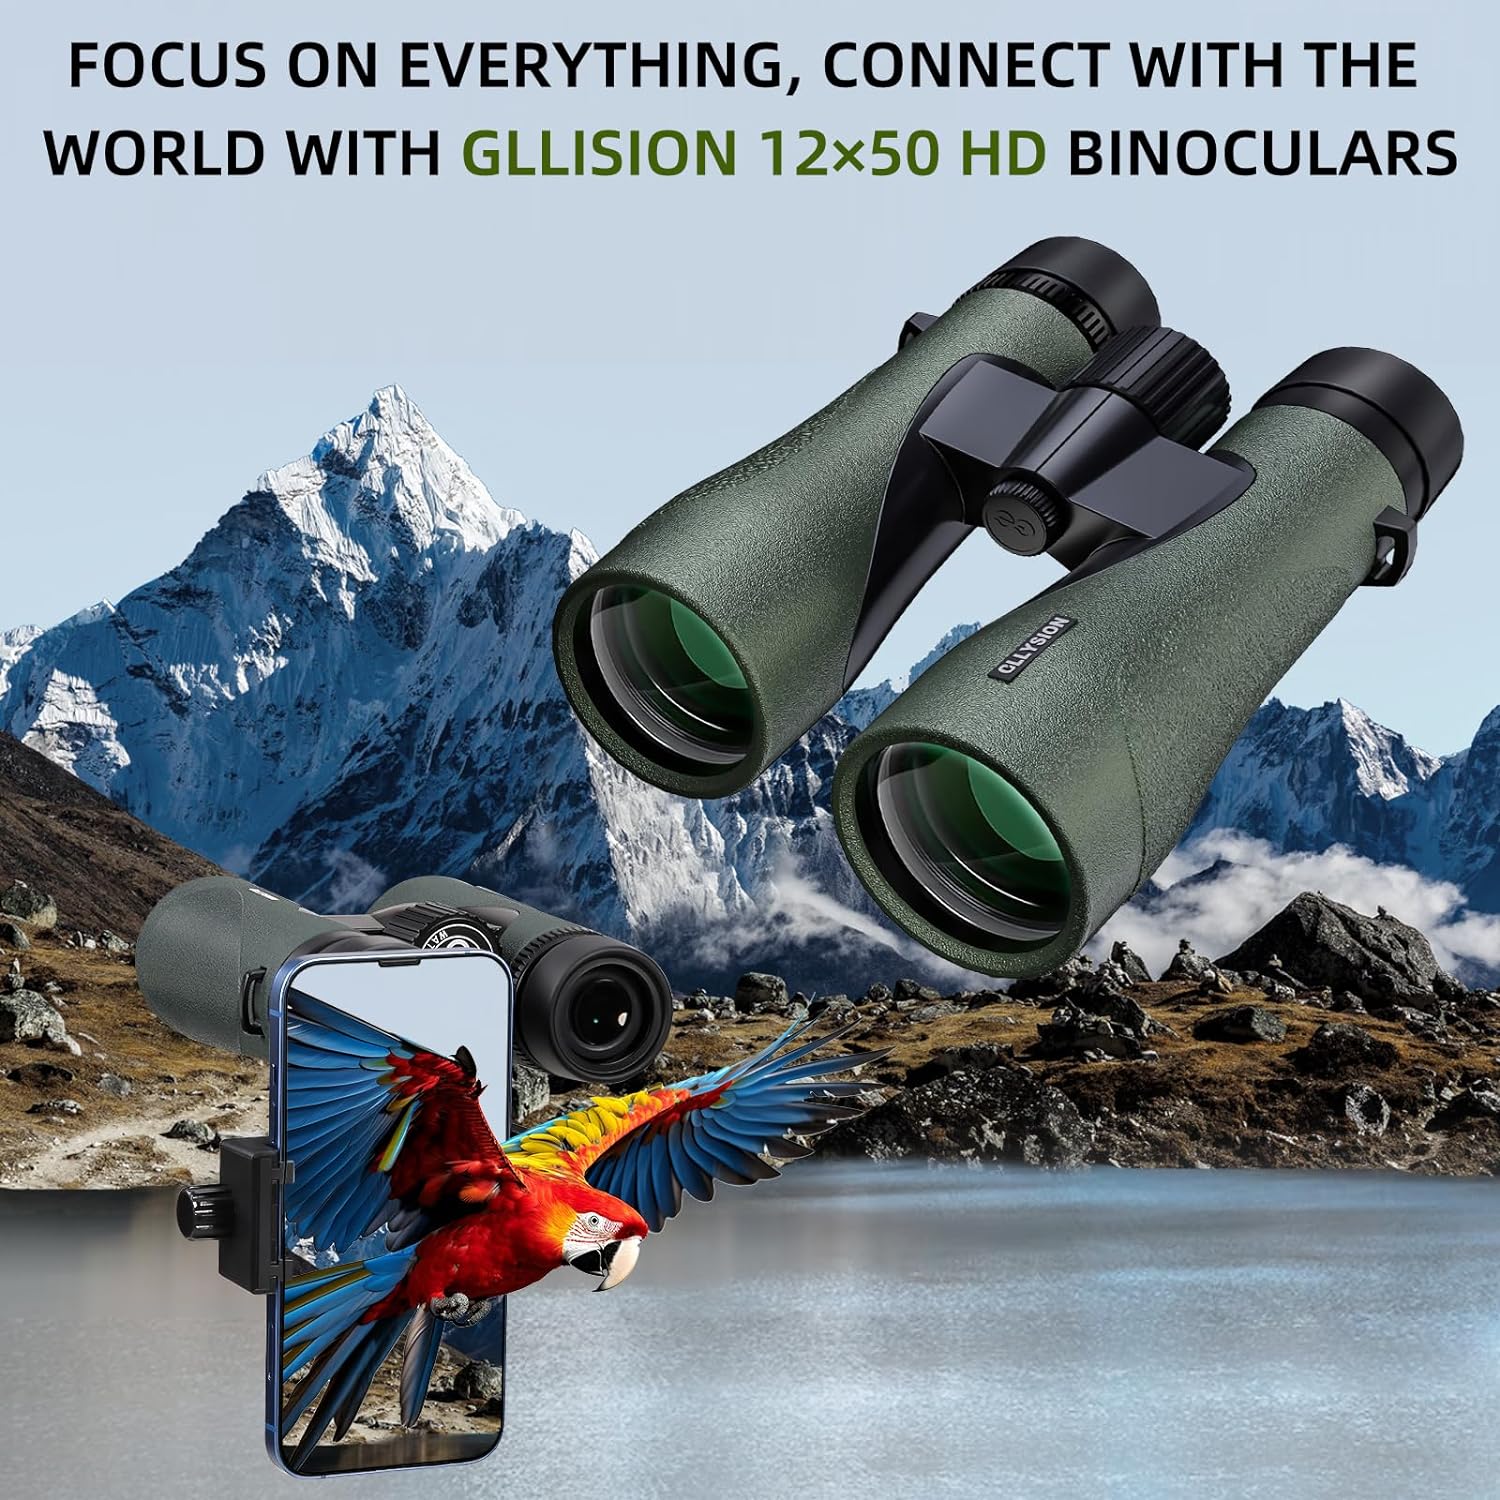 12X50 Professional HD Binoculars for Adults with Phone Adapter, High Power Binoculars with BaK4 prisms, Super Bright Lightweight  Waterproof Binoculars Perfect for Bird Watching, Hunting, Stargazing